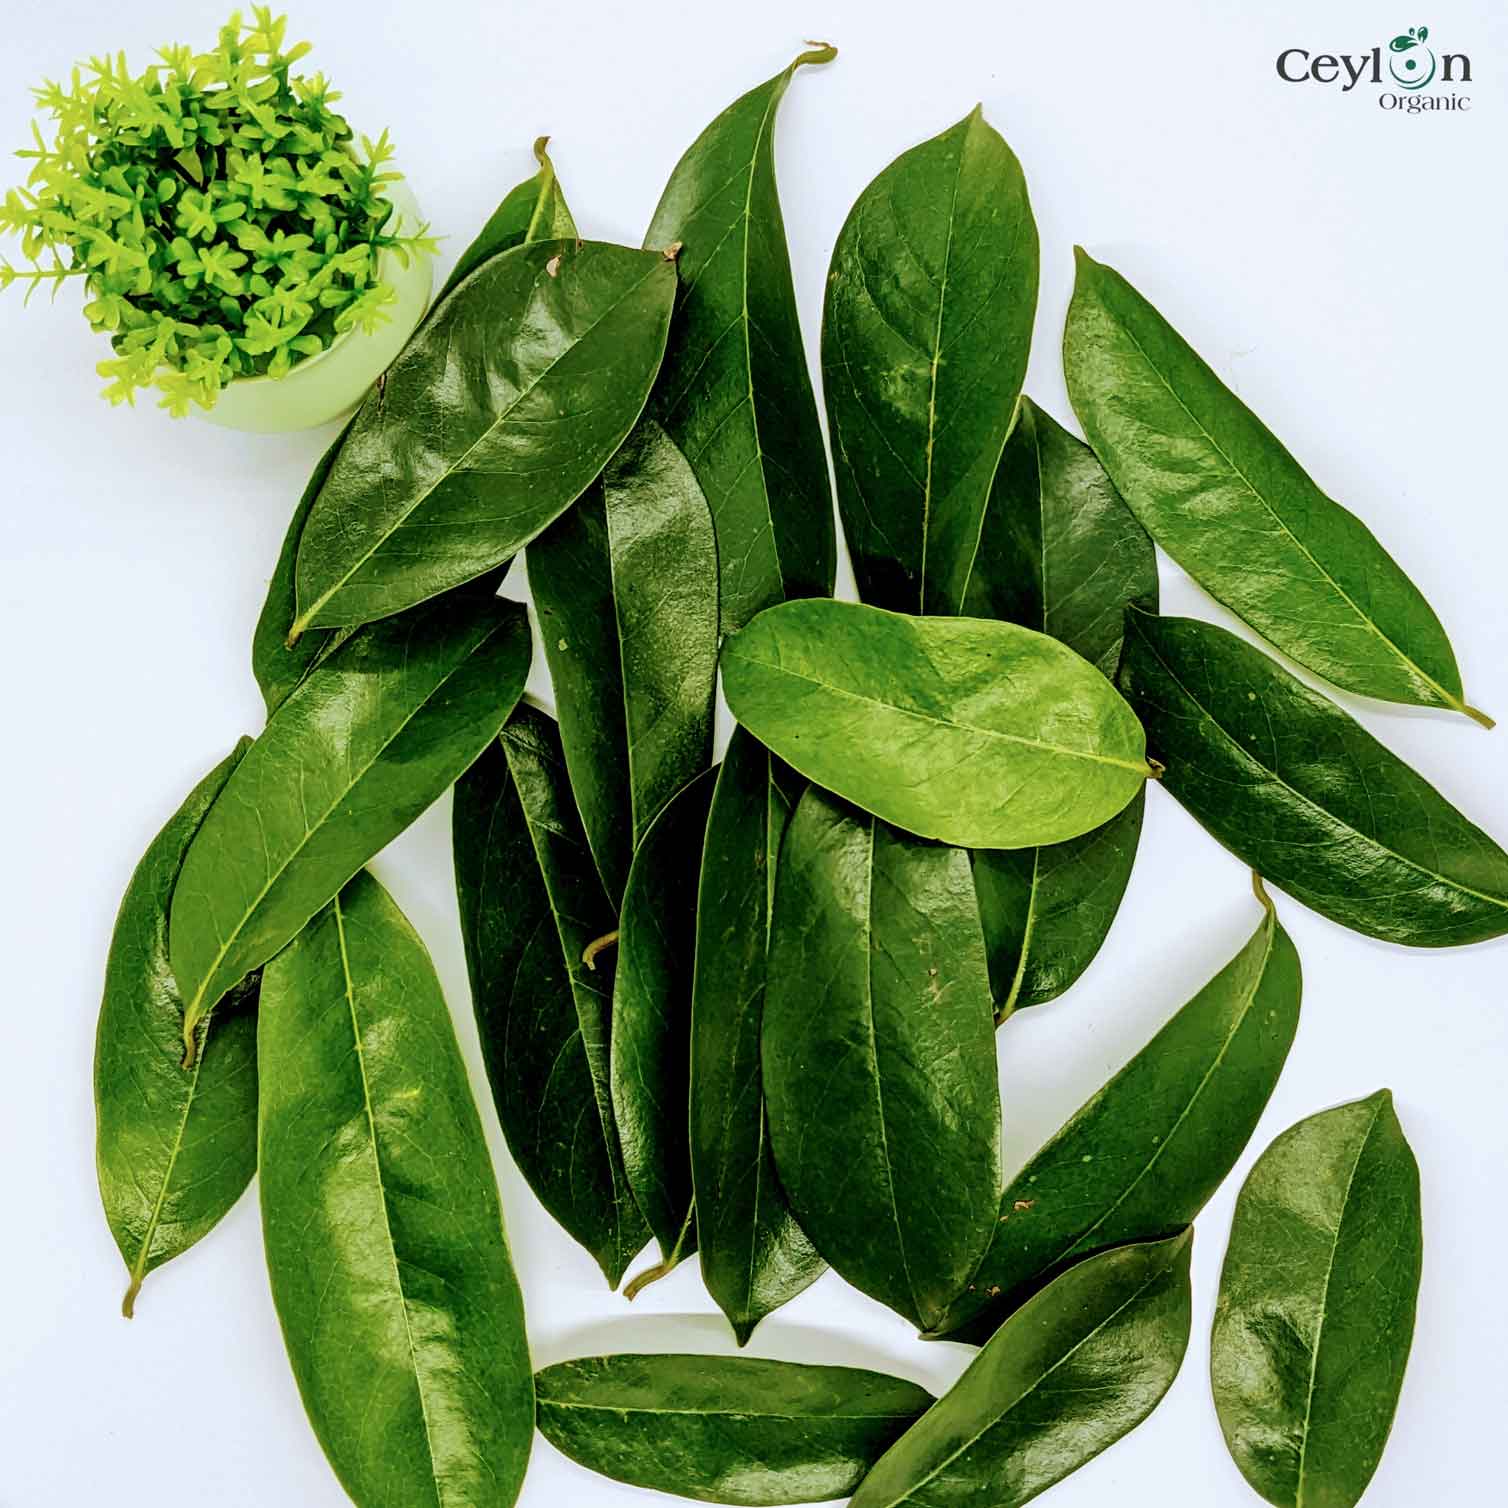 500+ Soursop Leaves, Dried Soursop Leaves Organic, Guanabana, Graviola, Annona Muricata | Ceylon Organic-4